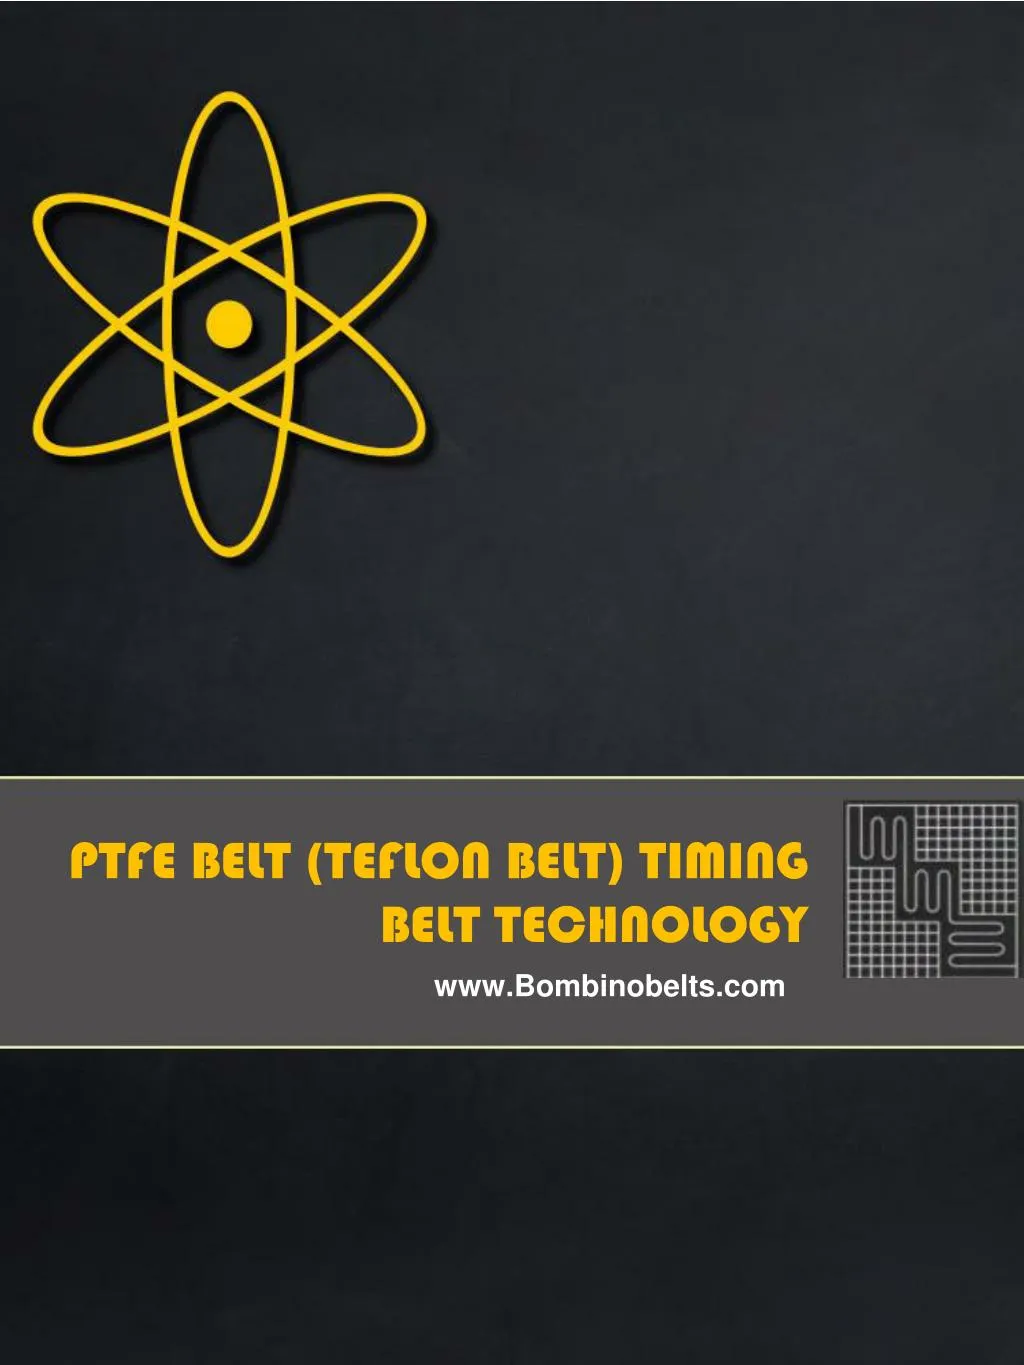 ptfe belt teflon belt timing belt technology